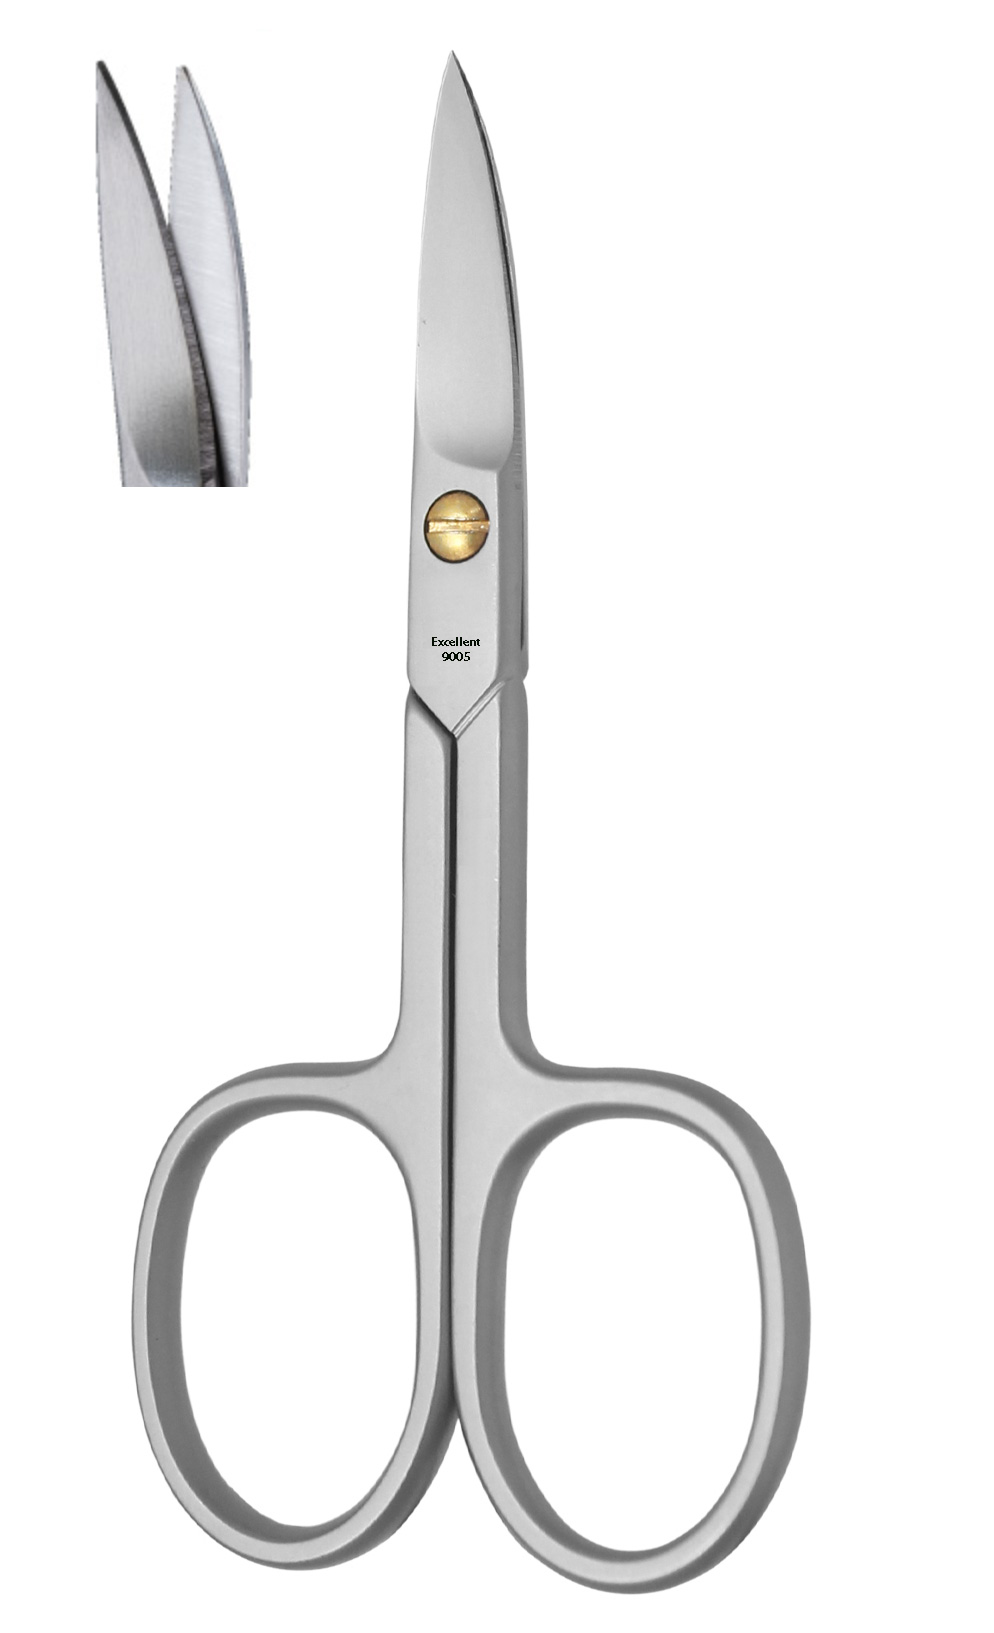 Excellent Nail Scissors 9.0 cm curved